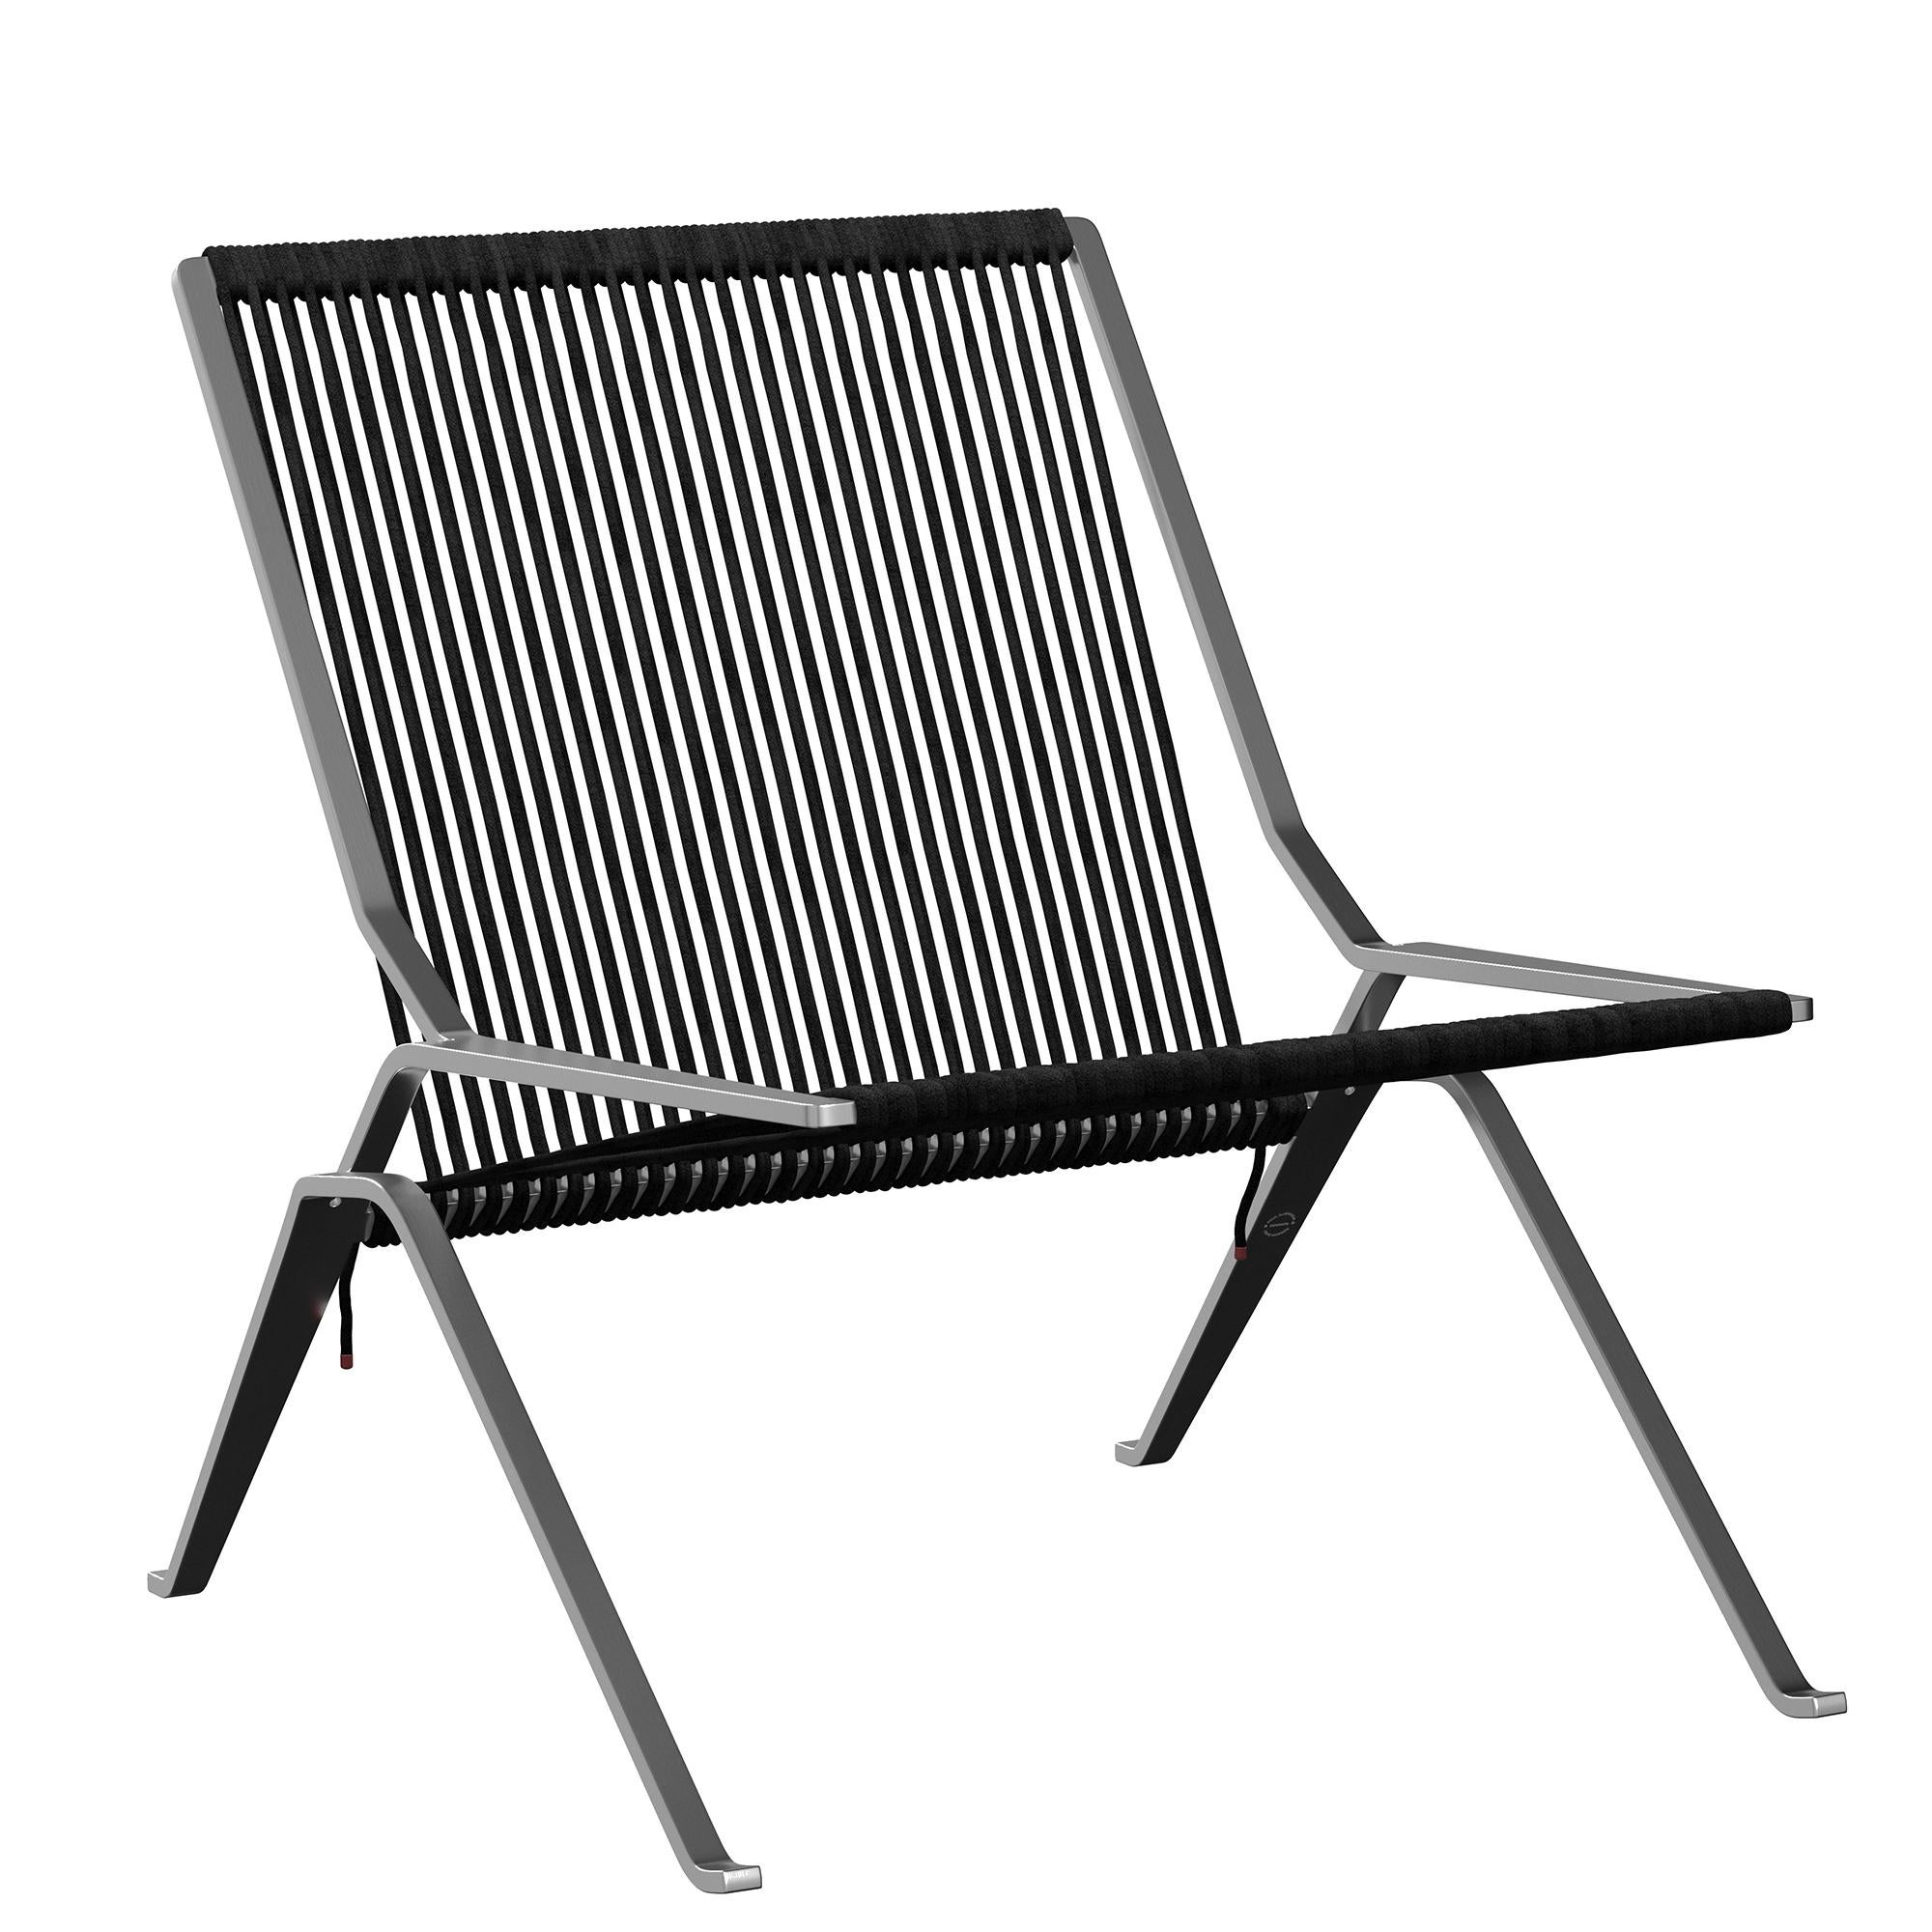 Steel Poul Kjærholm 'PK25' Chair for Fritz Hansen in Black Flag Halyard For Sale